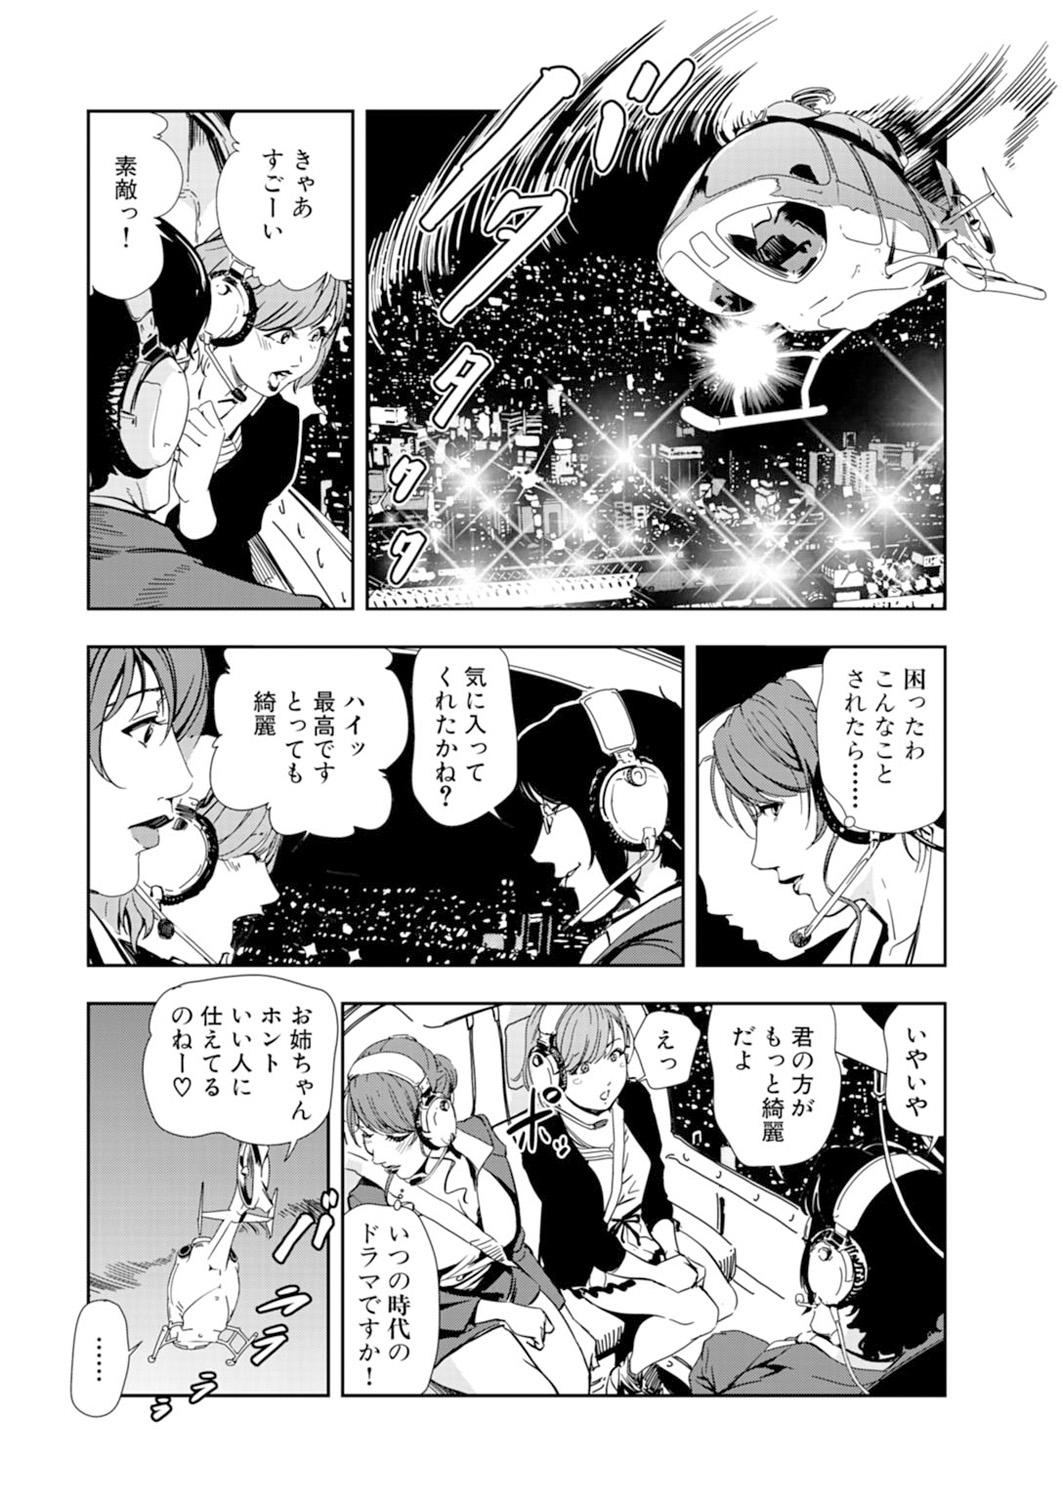 Shecock Nikuhisyo Yukiko 14 Ameteur Porn - Page 8